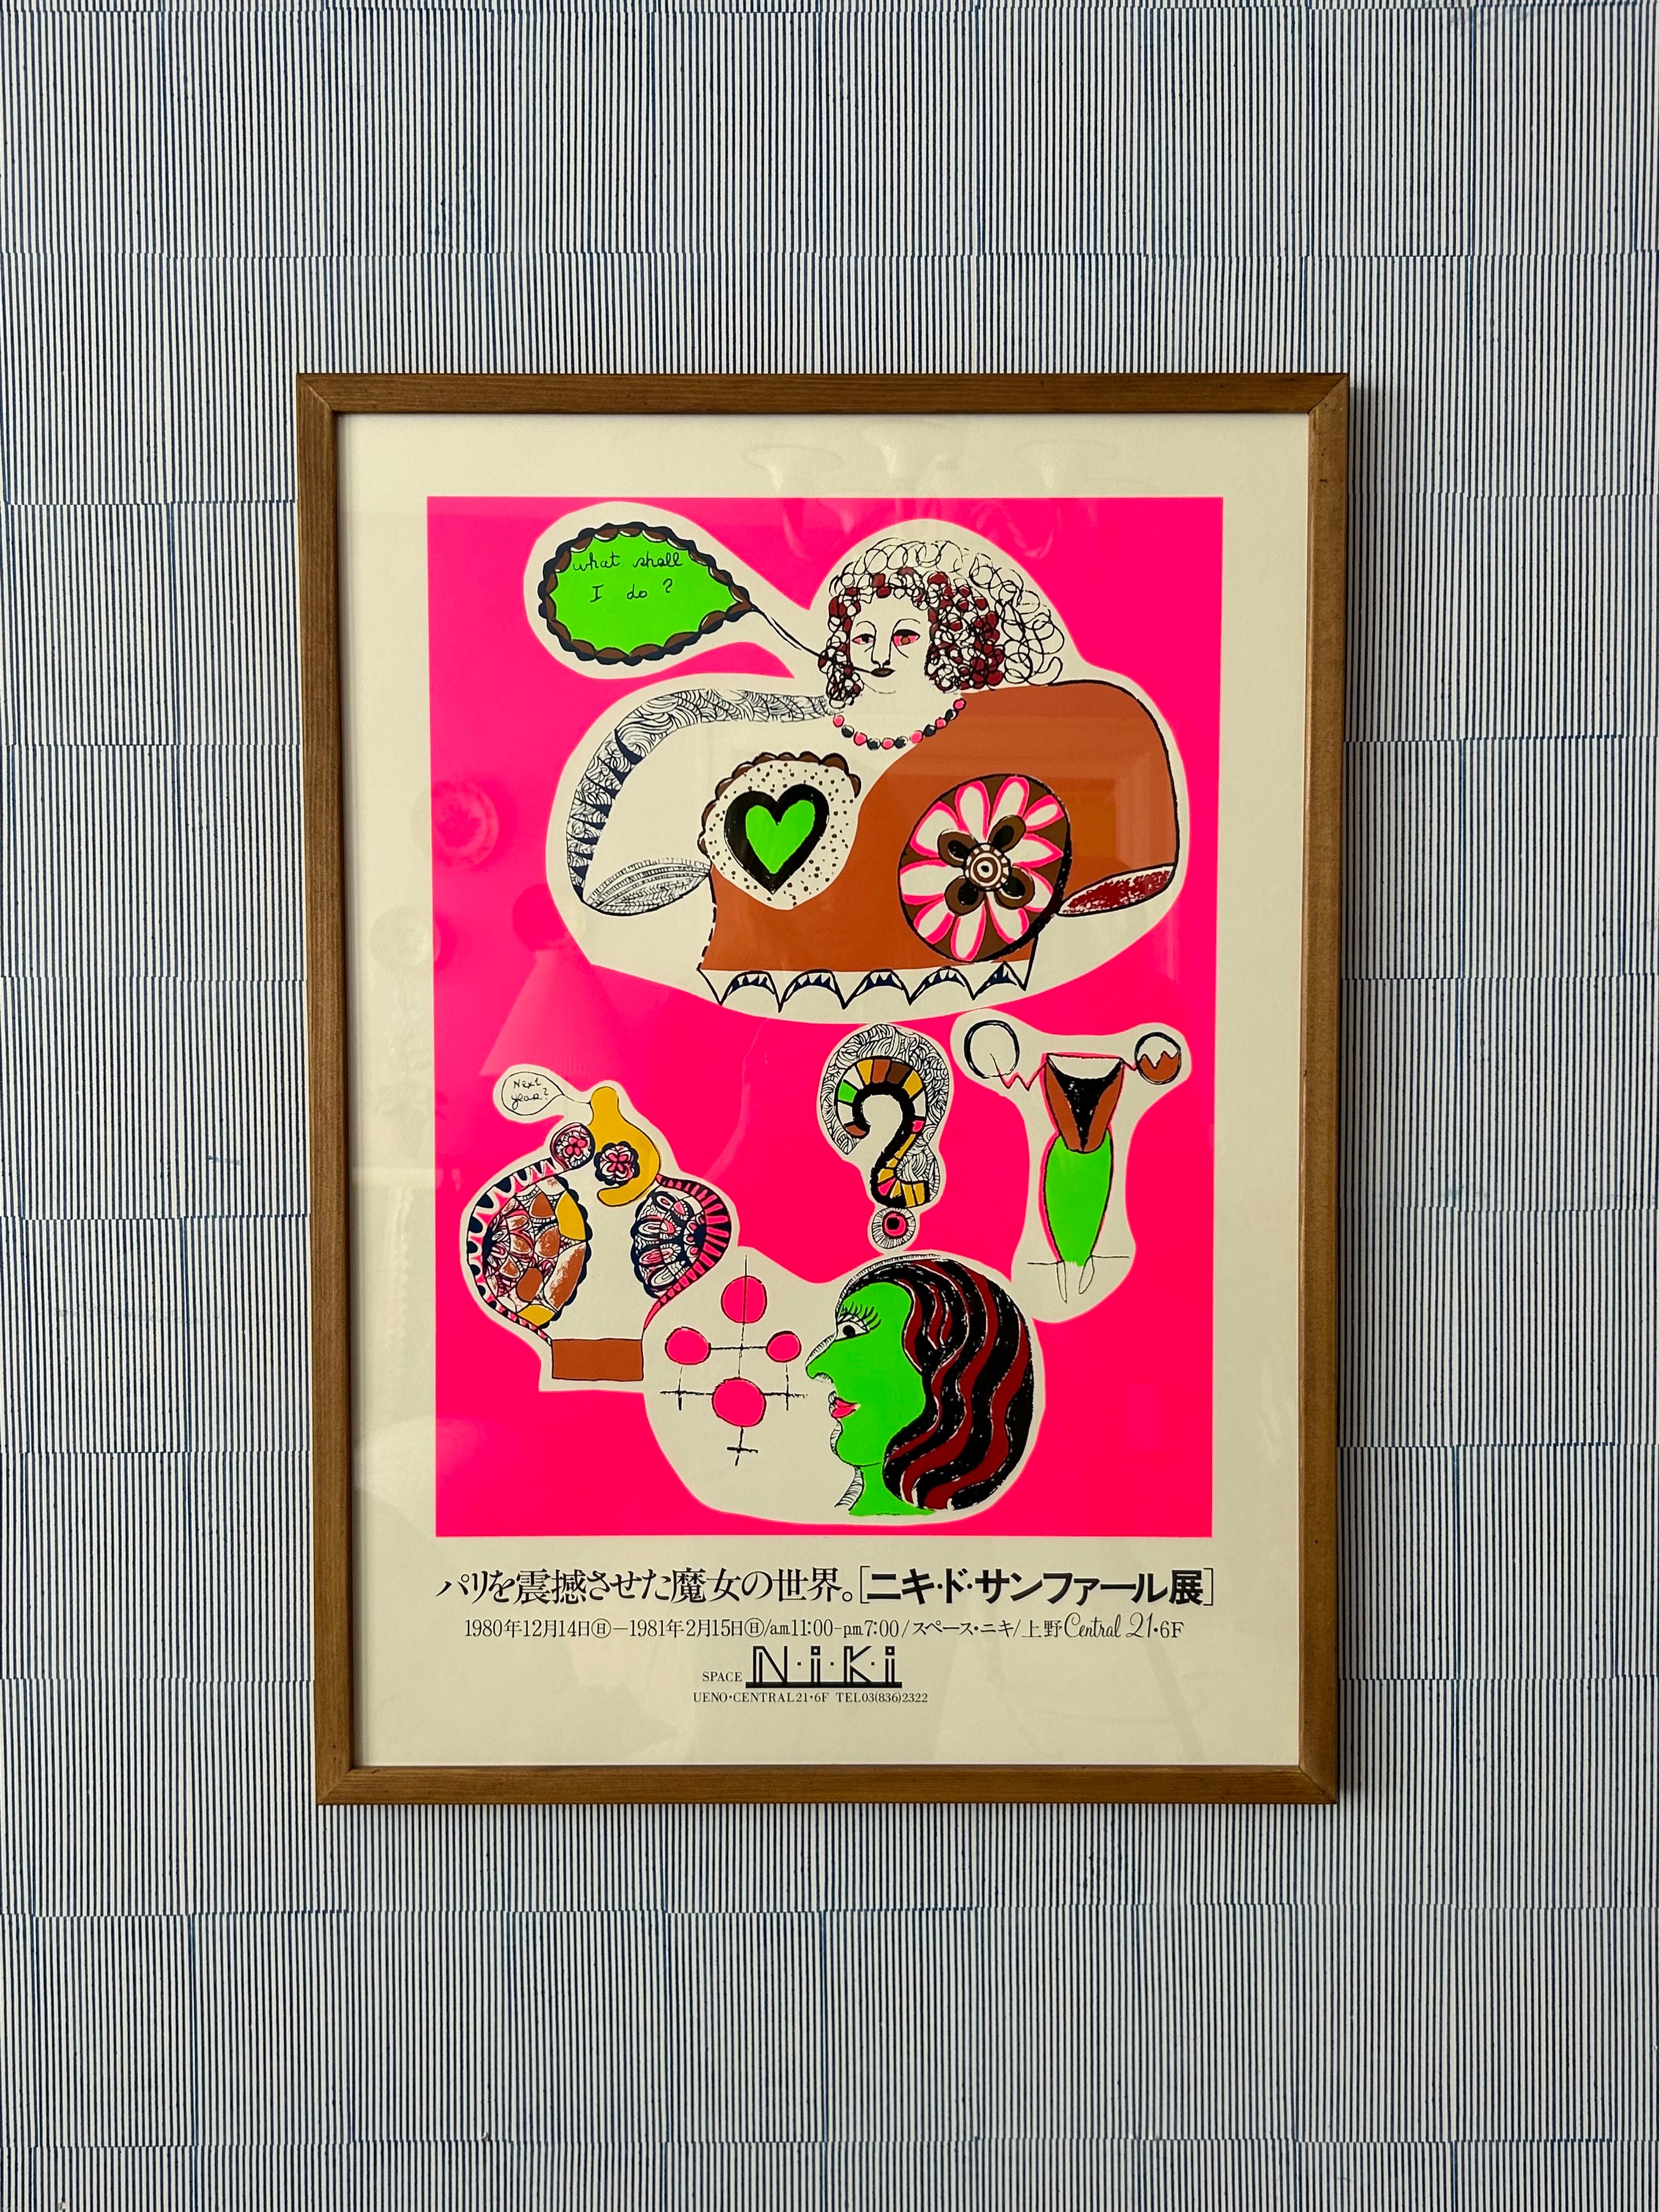 Japanese Vintage Niki de Saint Phalle “Space Niki” Ueno Exhibition Poster, Japan, 1980 For Sale